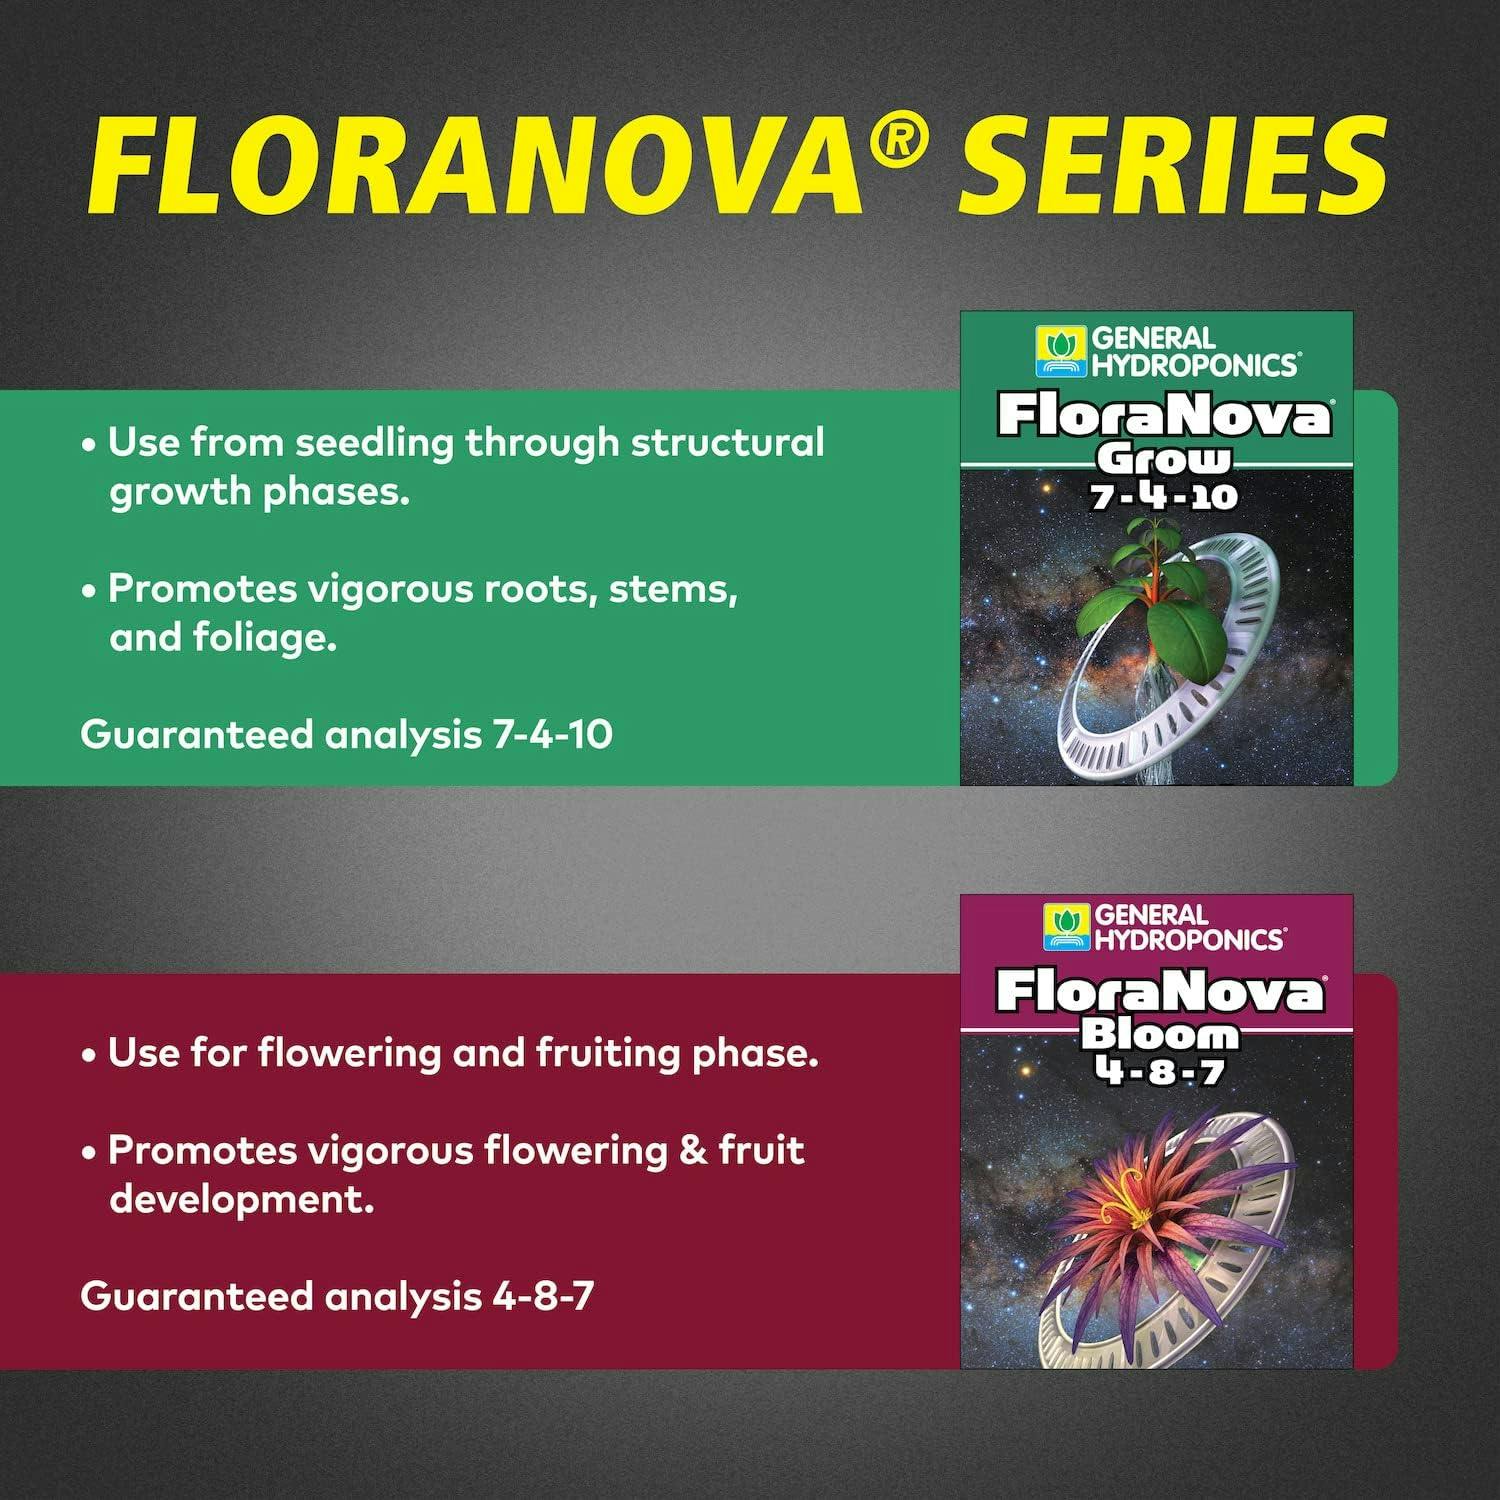 FloraNova Robust Growth Liquid Fertilizer, 1-Gallon